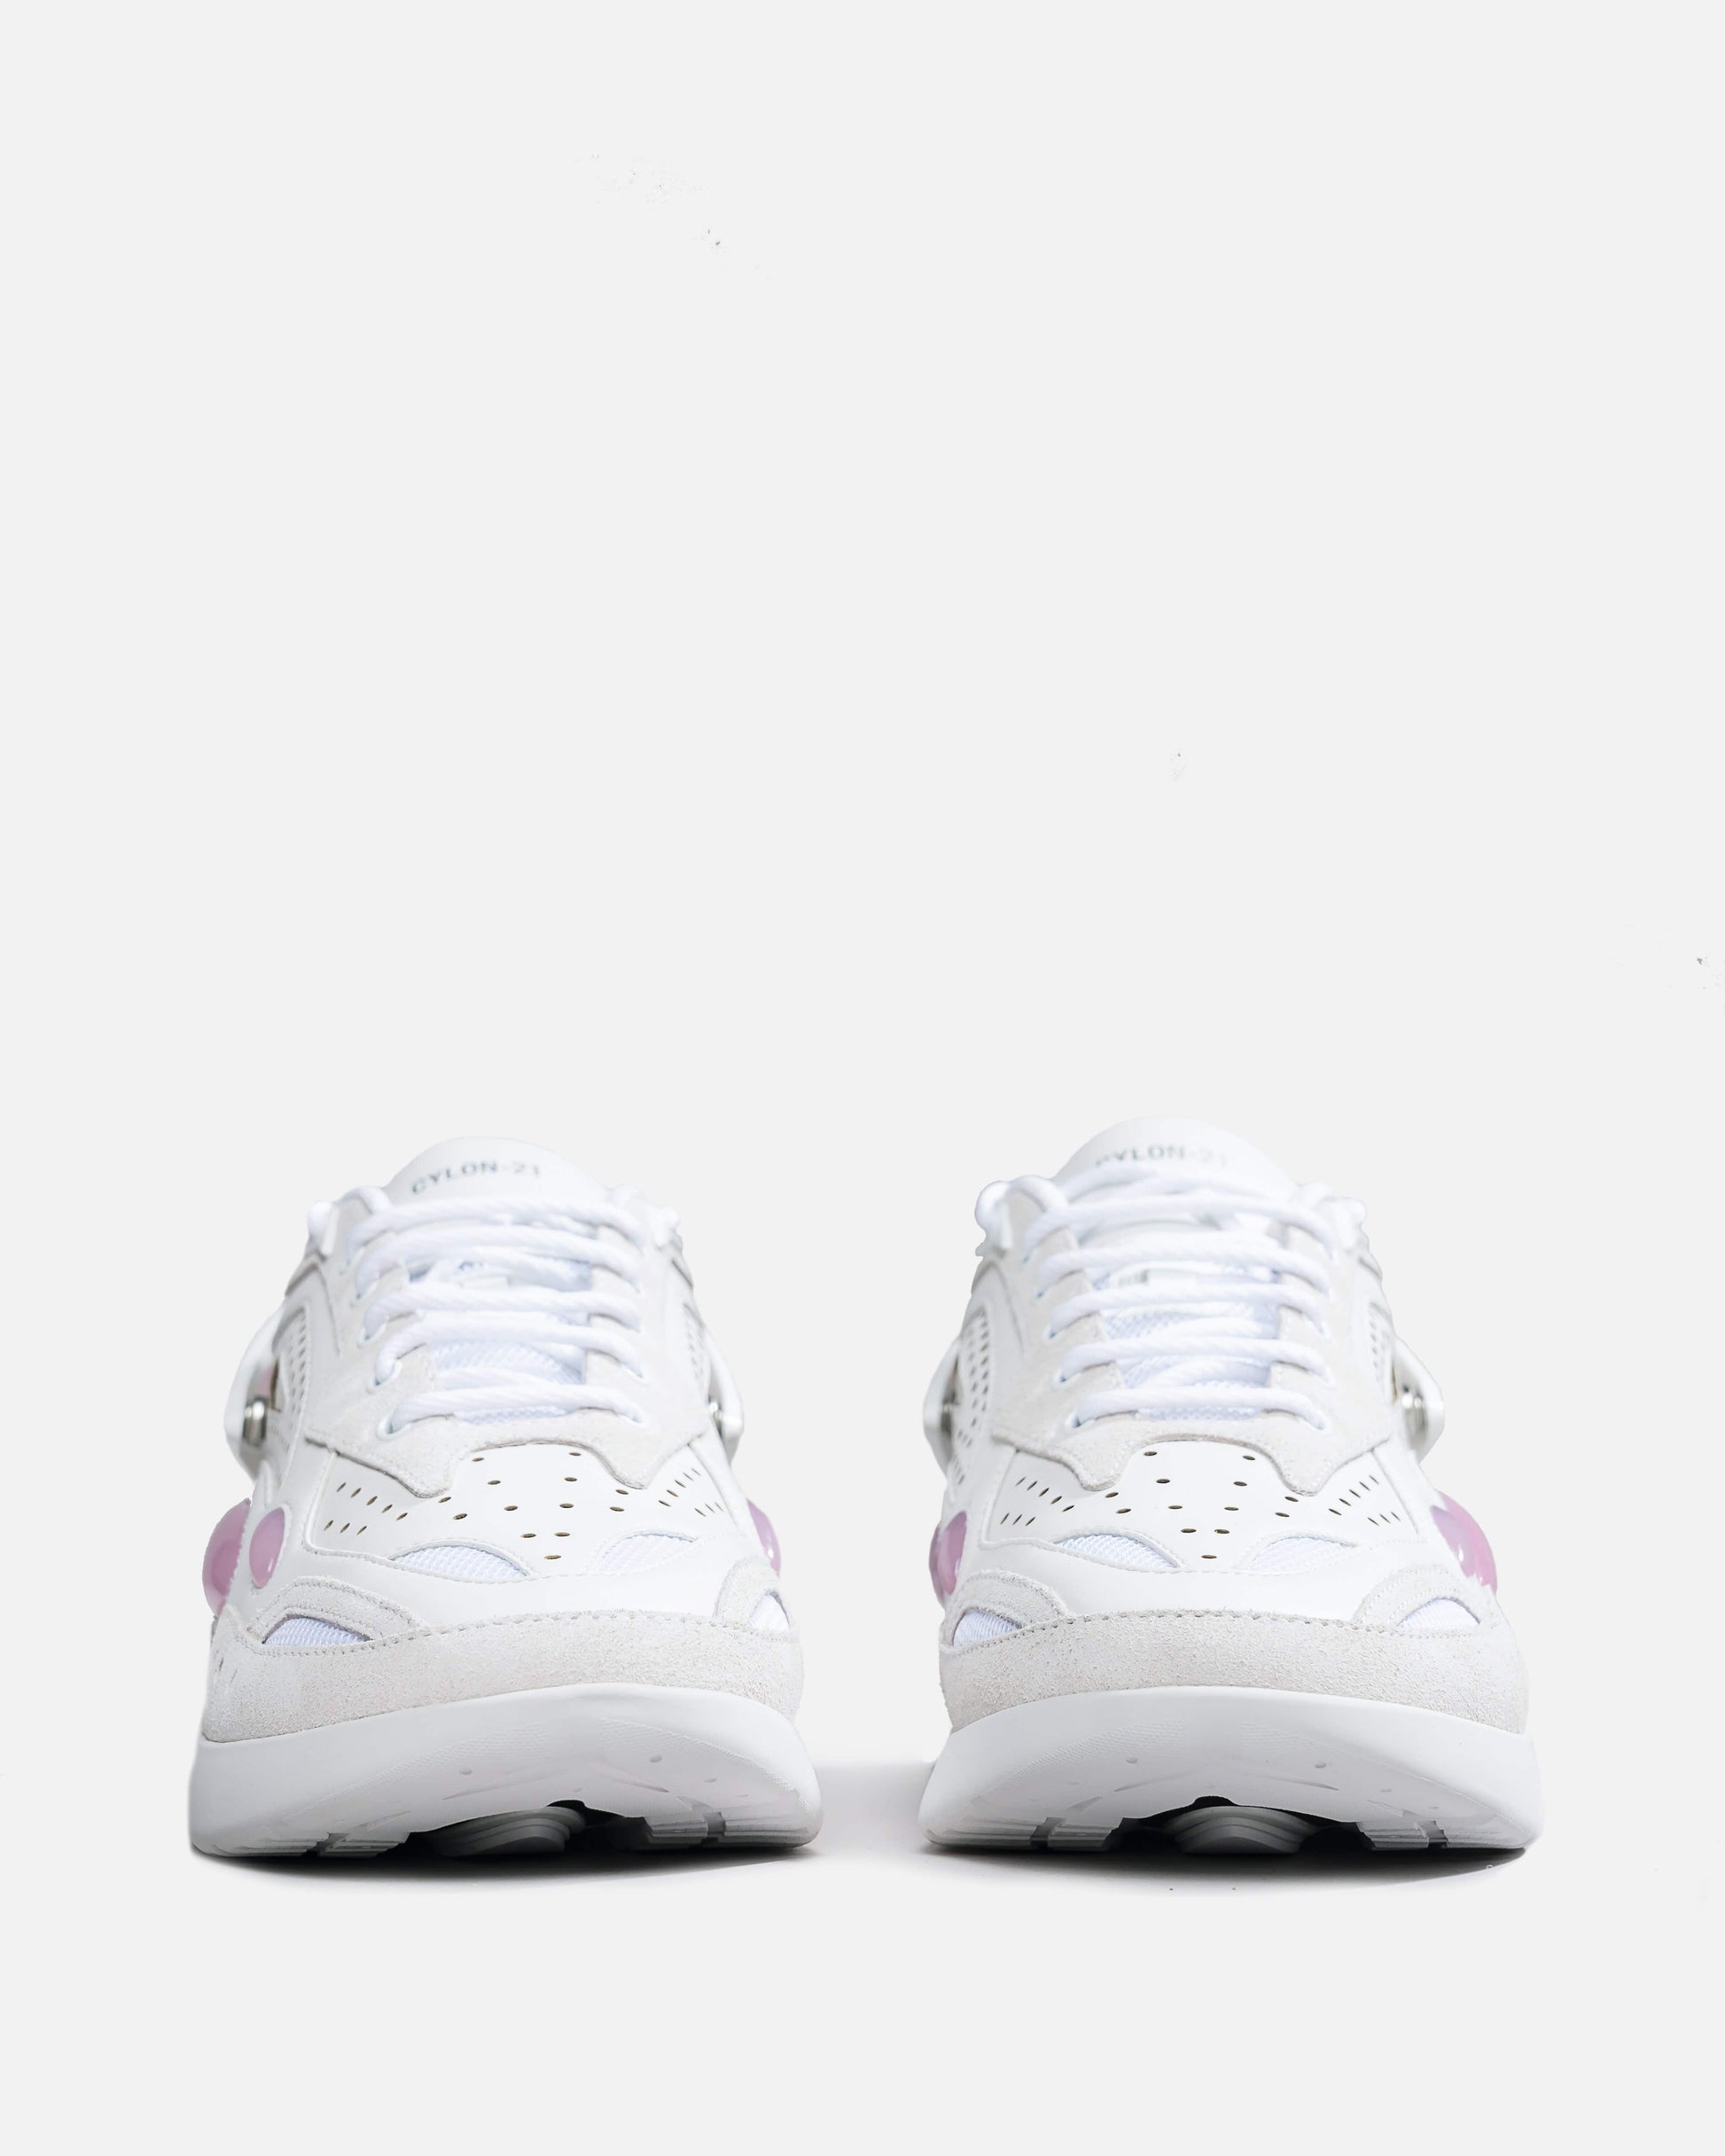 Raf Simons Men's Sneakers Cylon 21 in White & Pink